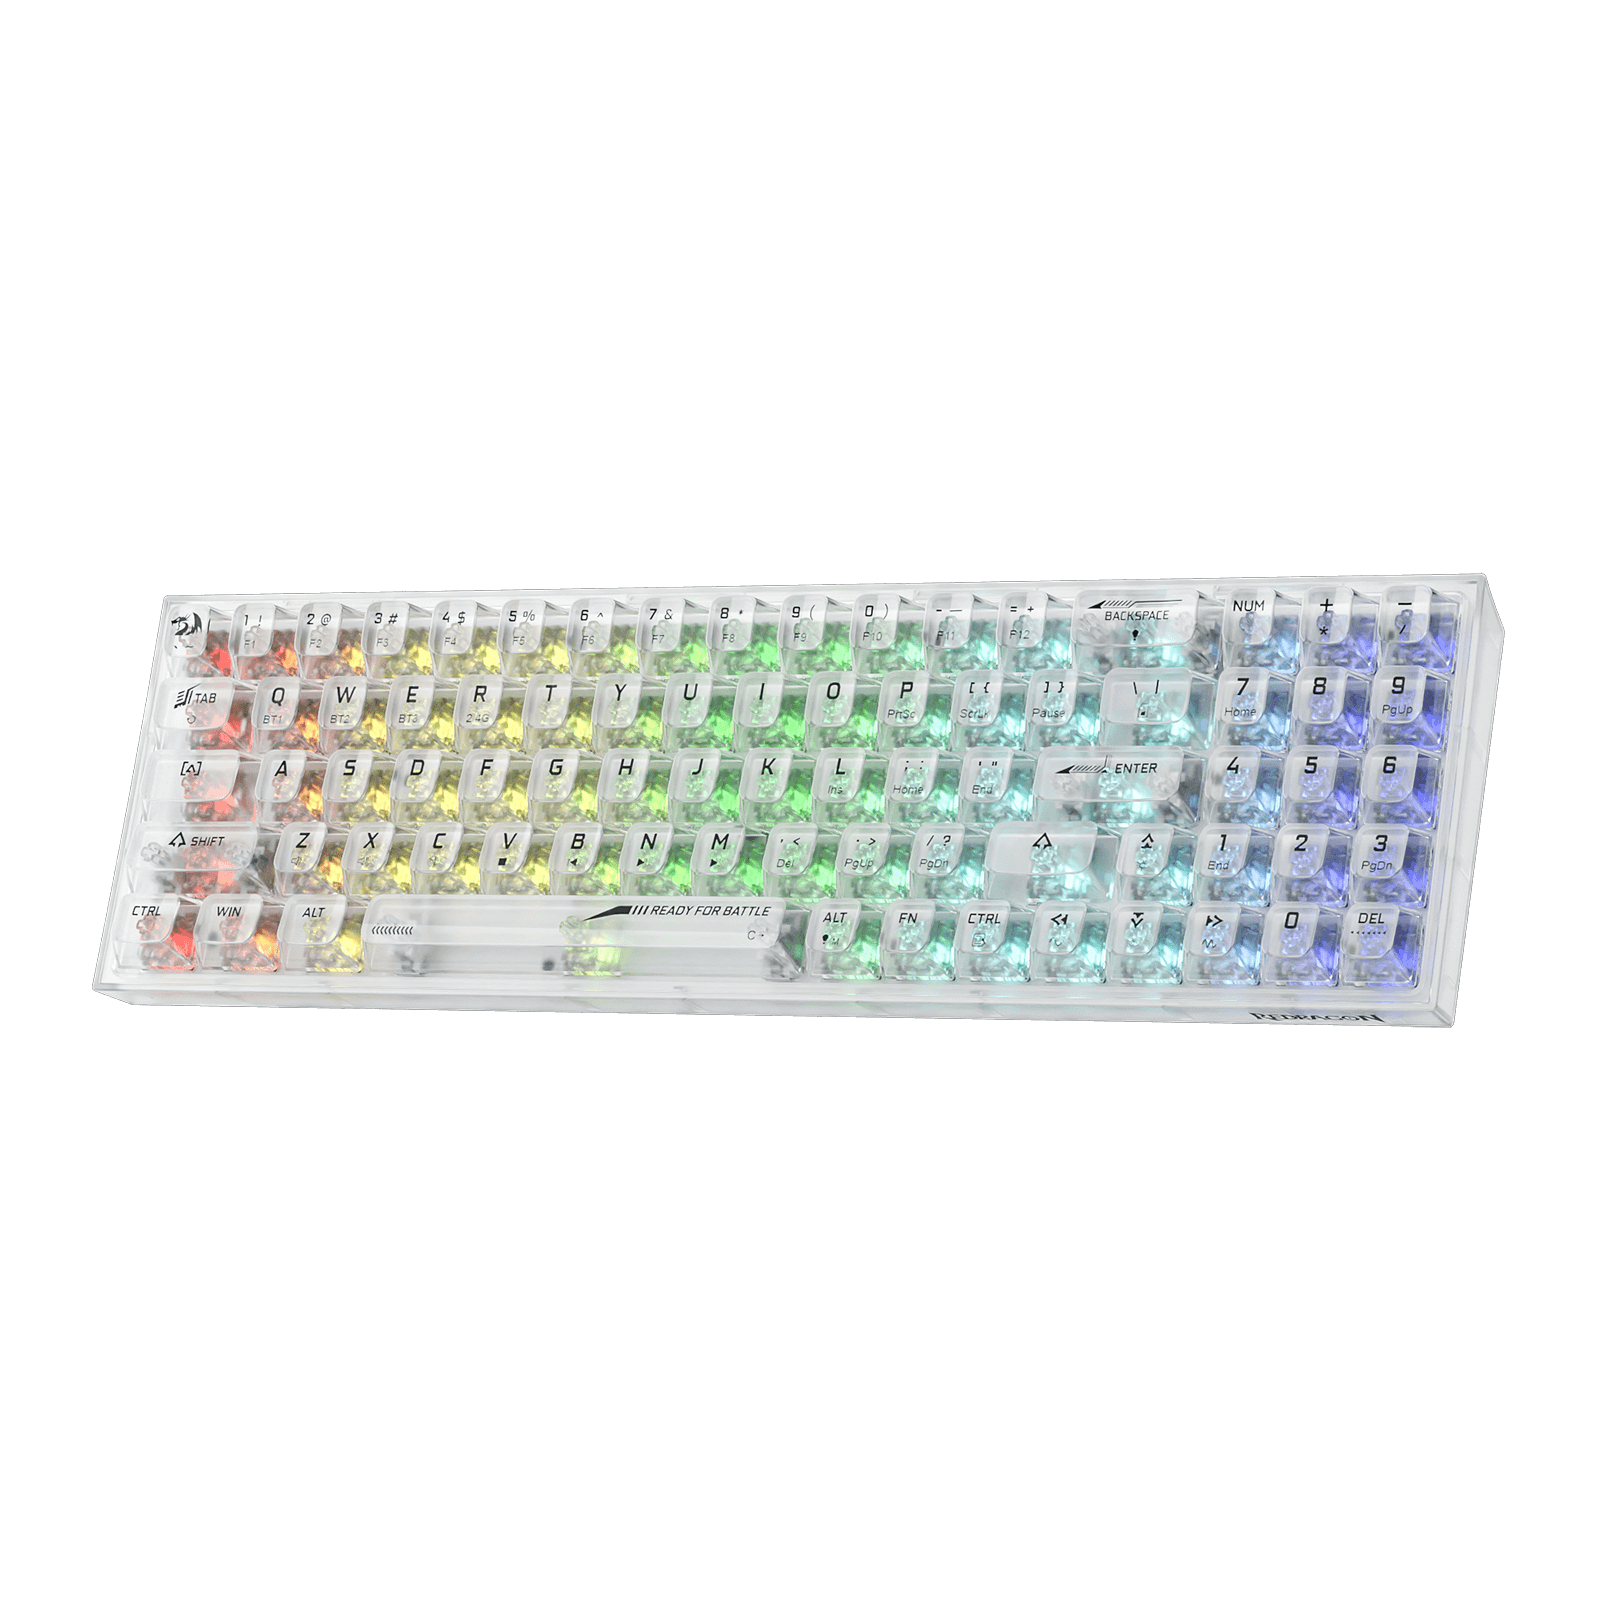 Redragon K628 PRO SE 75% Full-Transparent Keyboard | show